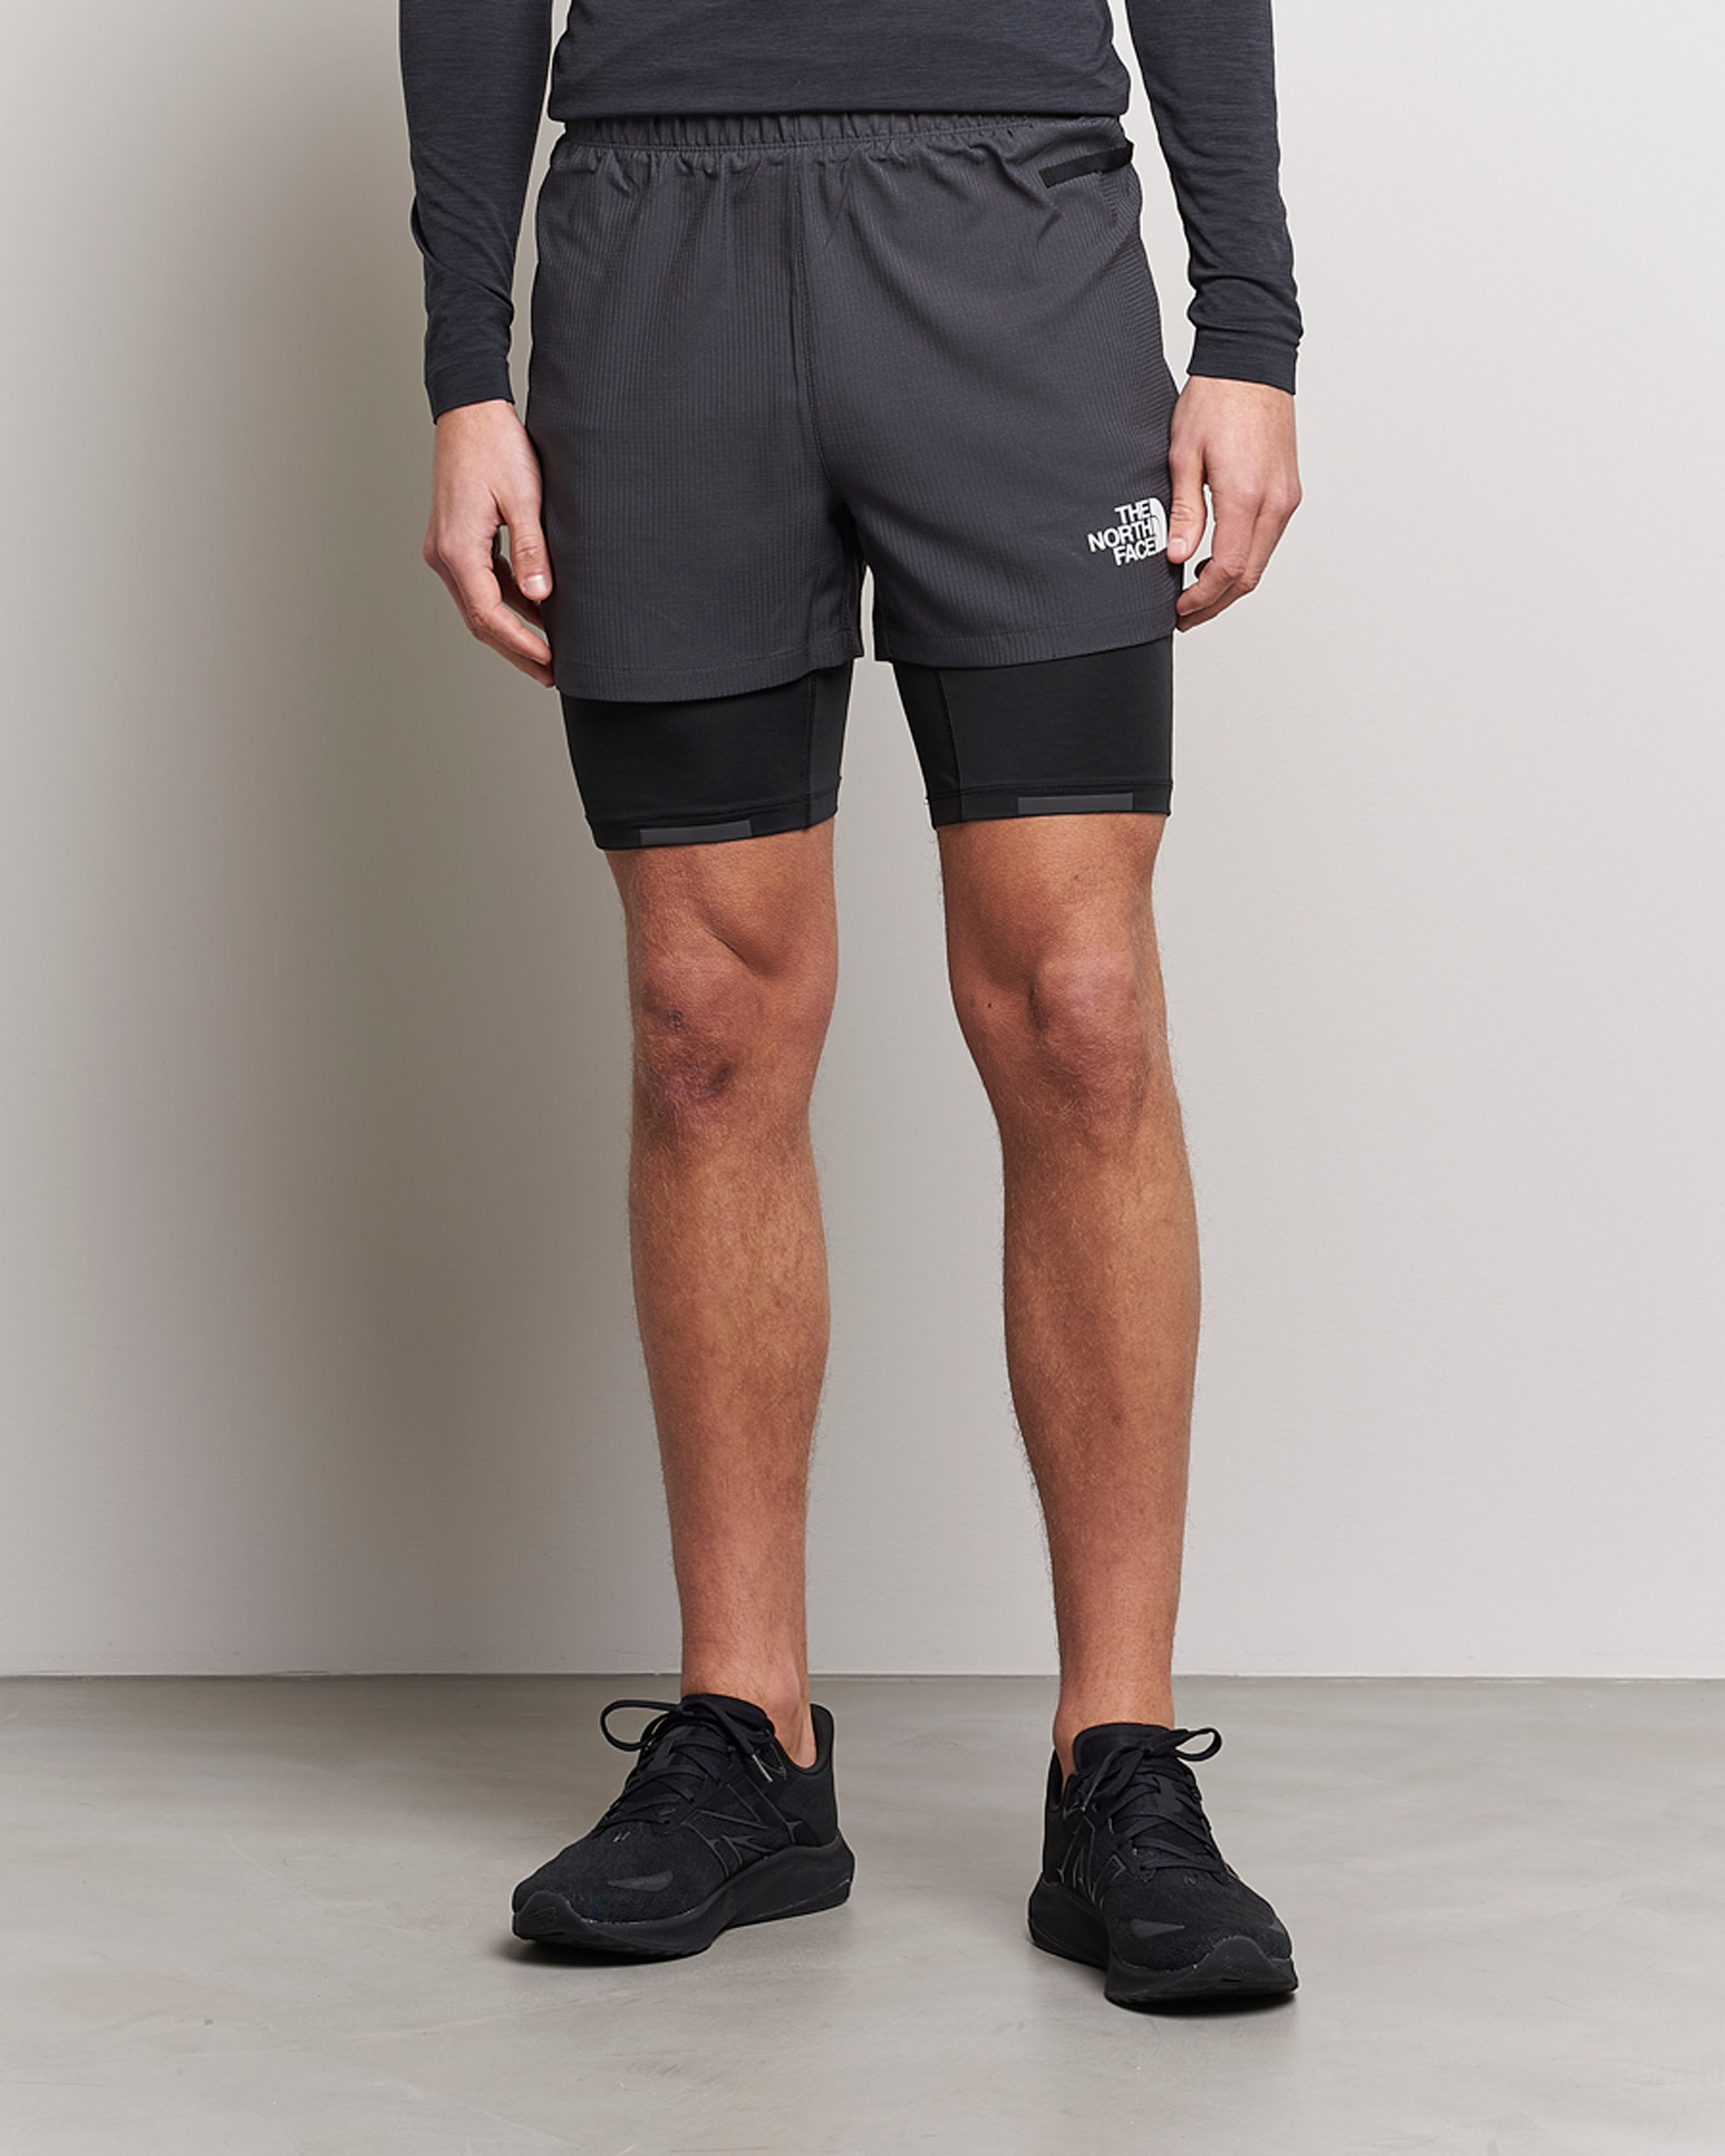 Men | The North Face | The North Face | Mountain Athletics Dual Shorts Black/Asphalt